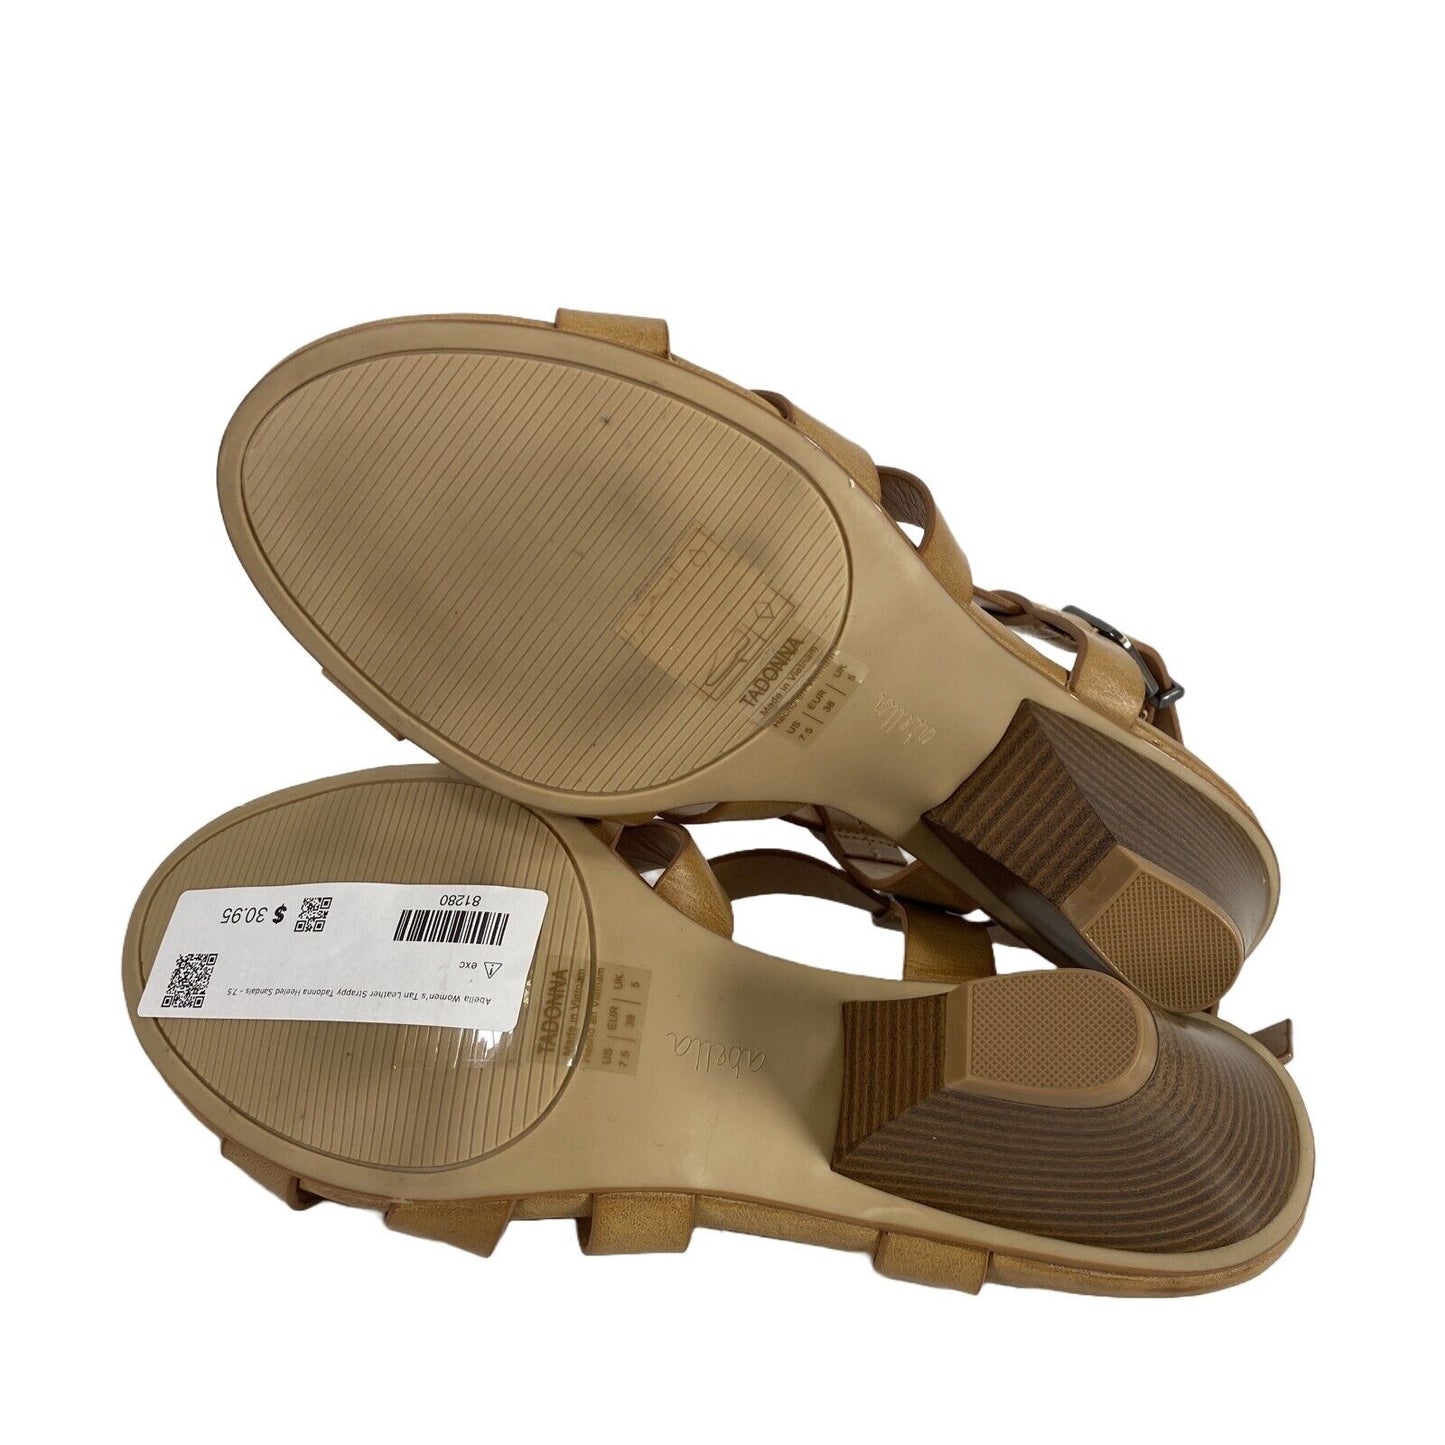 Abella Women's Tan Leather Strappy Tadonna Heeled Sandals - 7.5